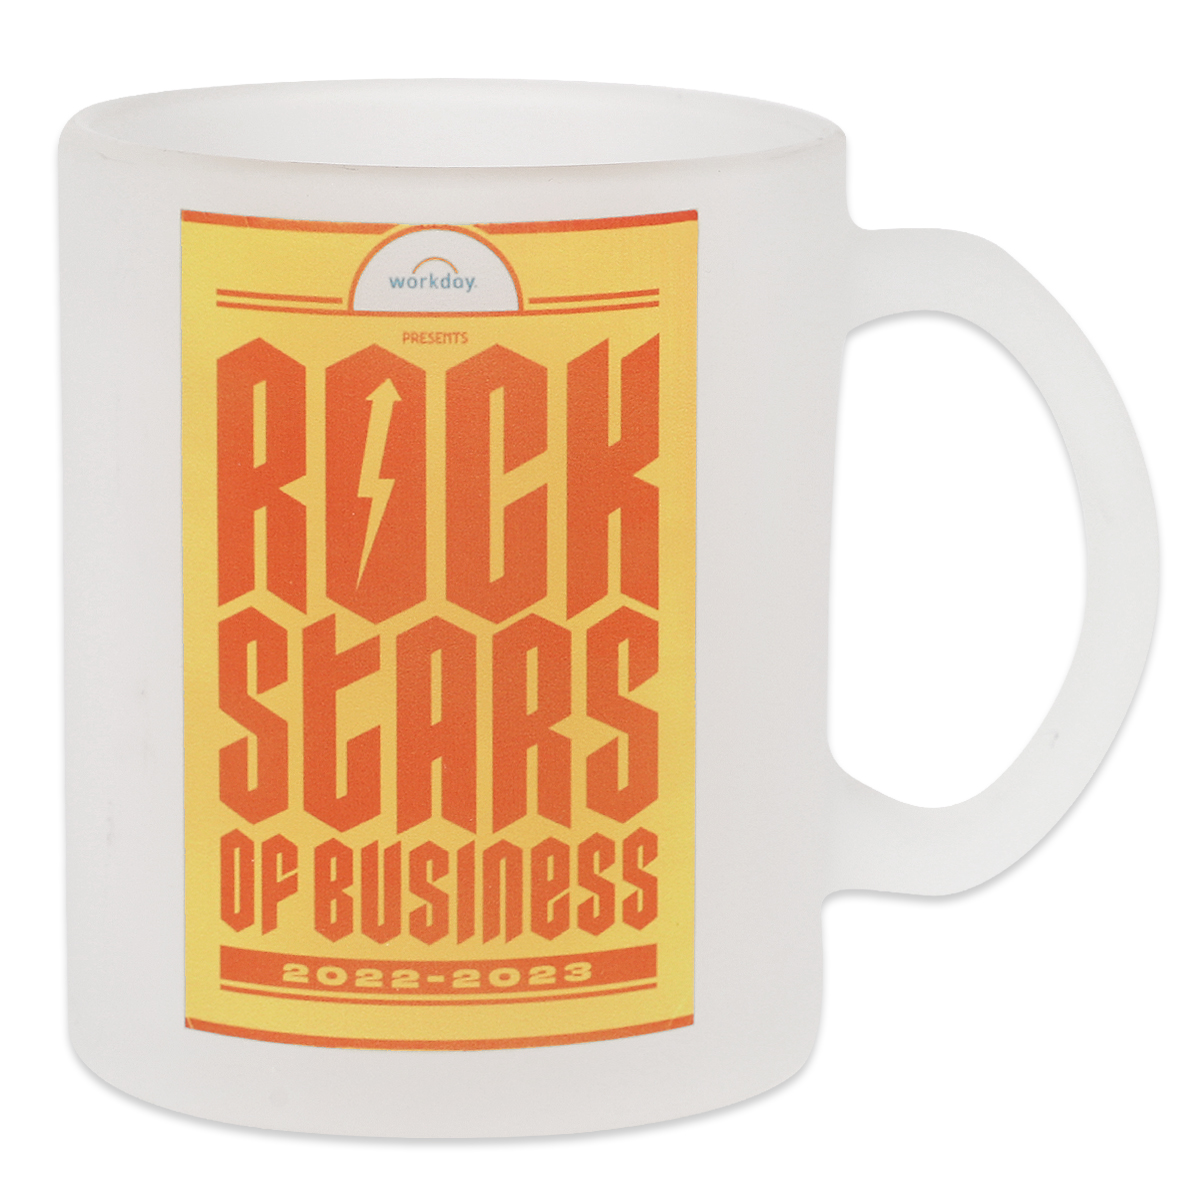 Rock Stars of Business Mug